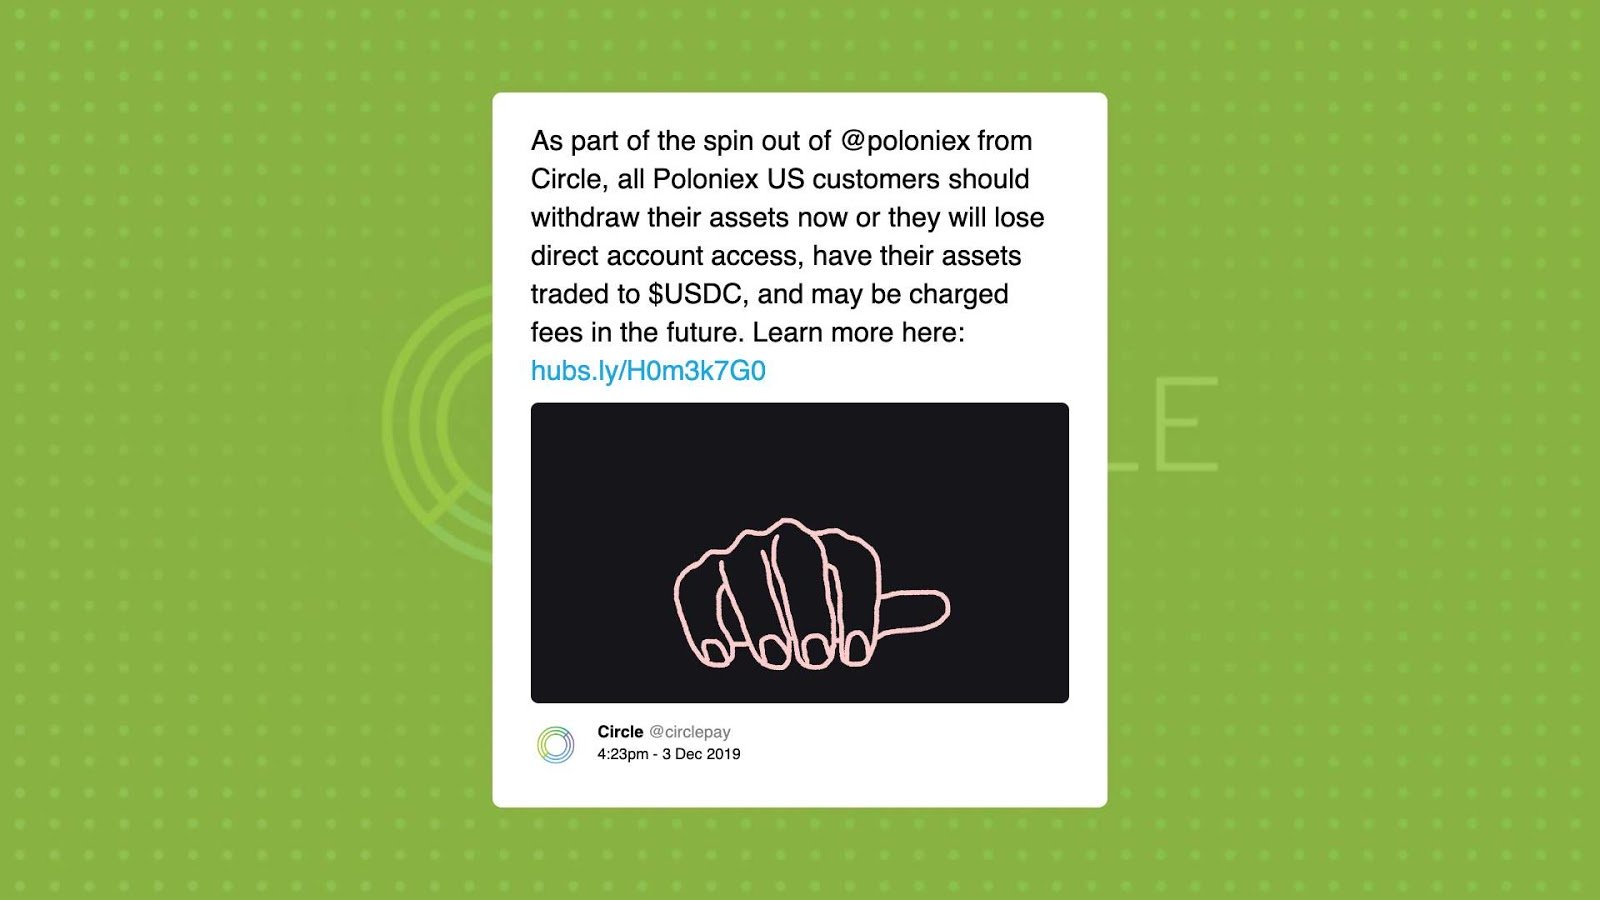 Circle警告美国的Poloniex客户将资产转换为USDC插图(1)